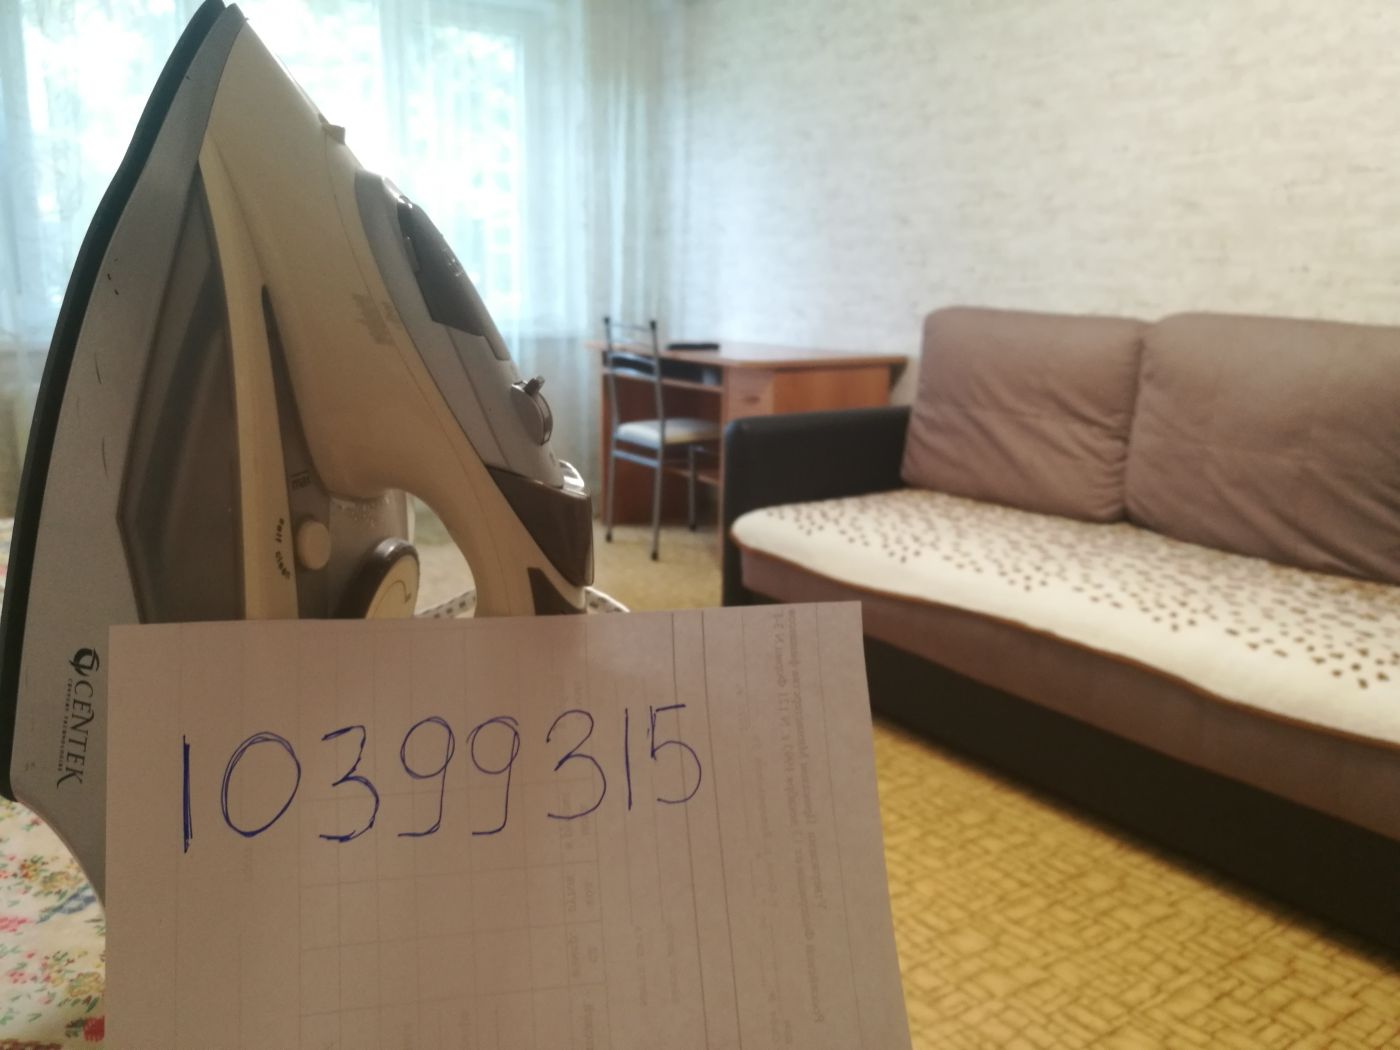 Квартира 3-х комнатная по улице Победы, 138